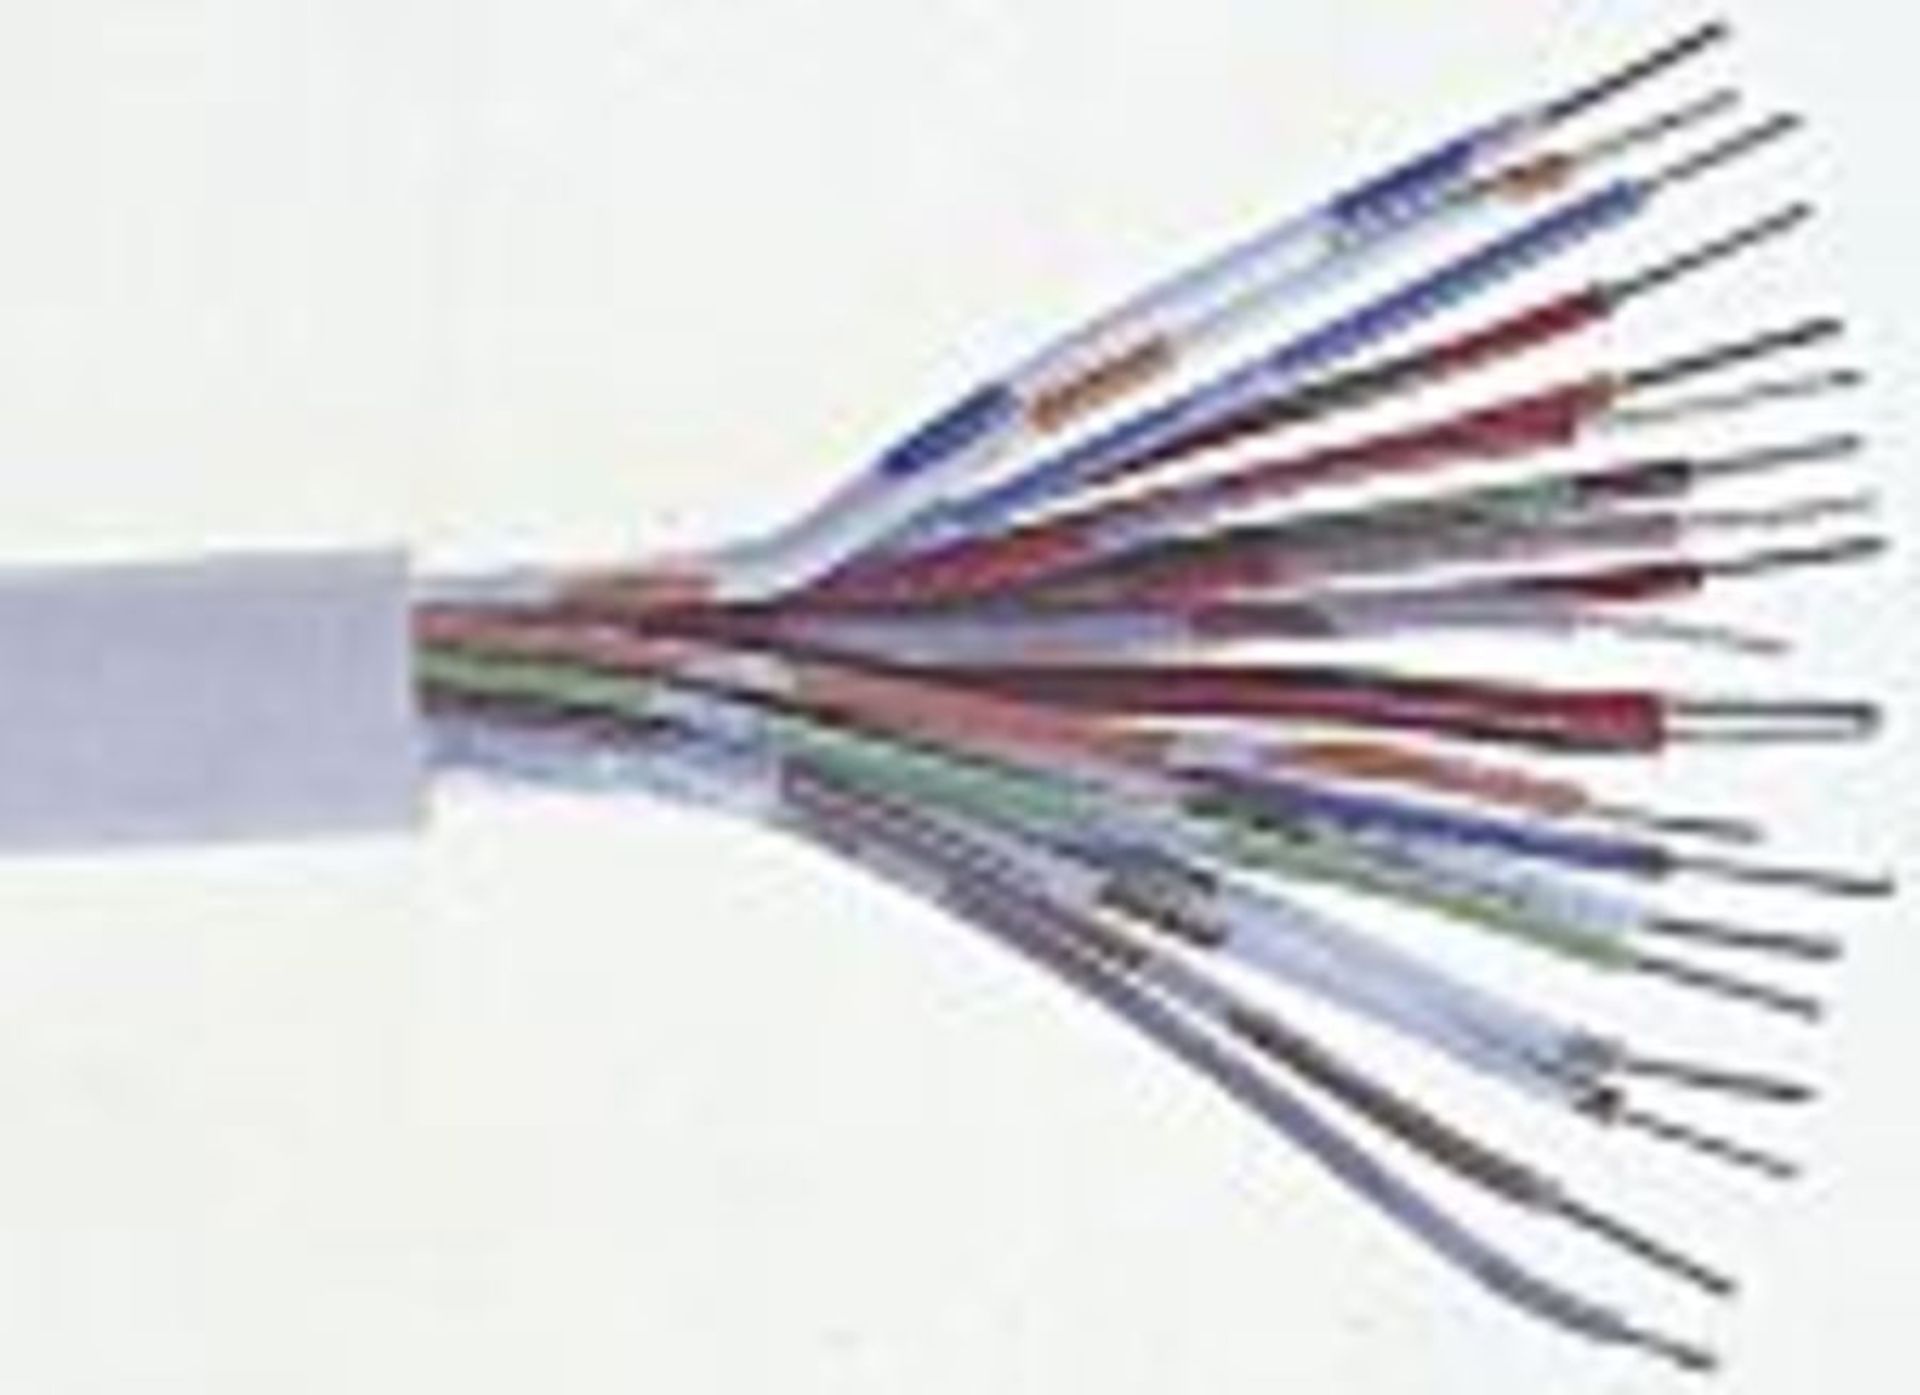 RS PRO 25 Pairs 100m CW1308 Telecom Cable Purple Sheath - Image 2 of 2